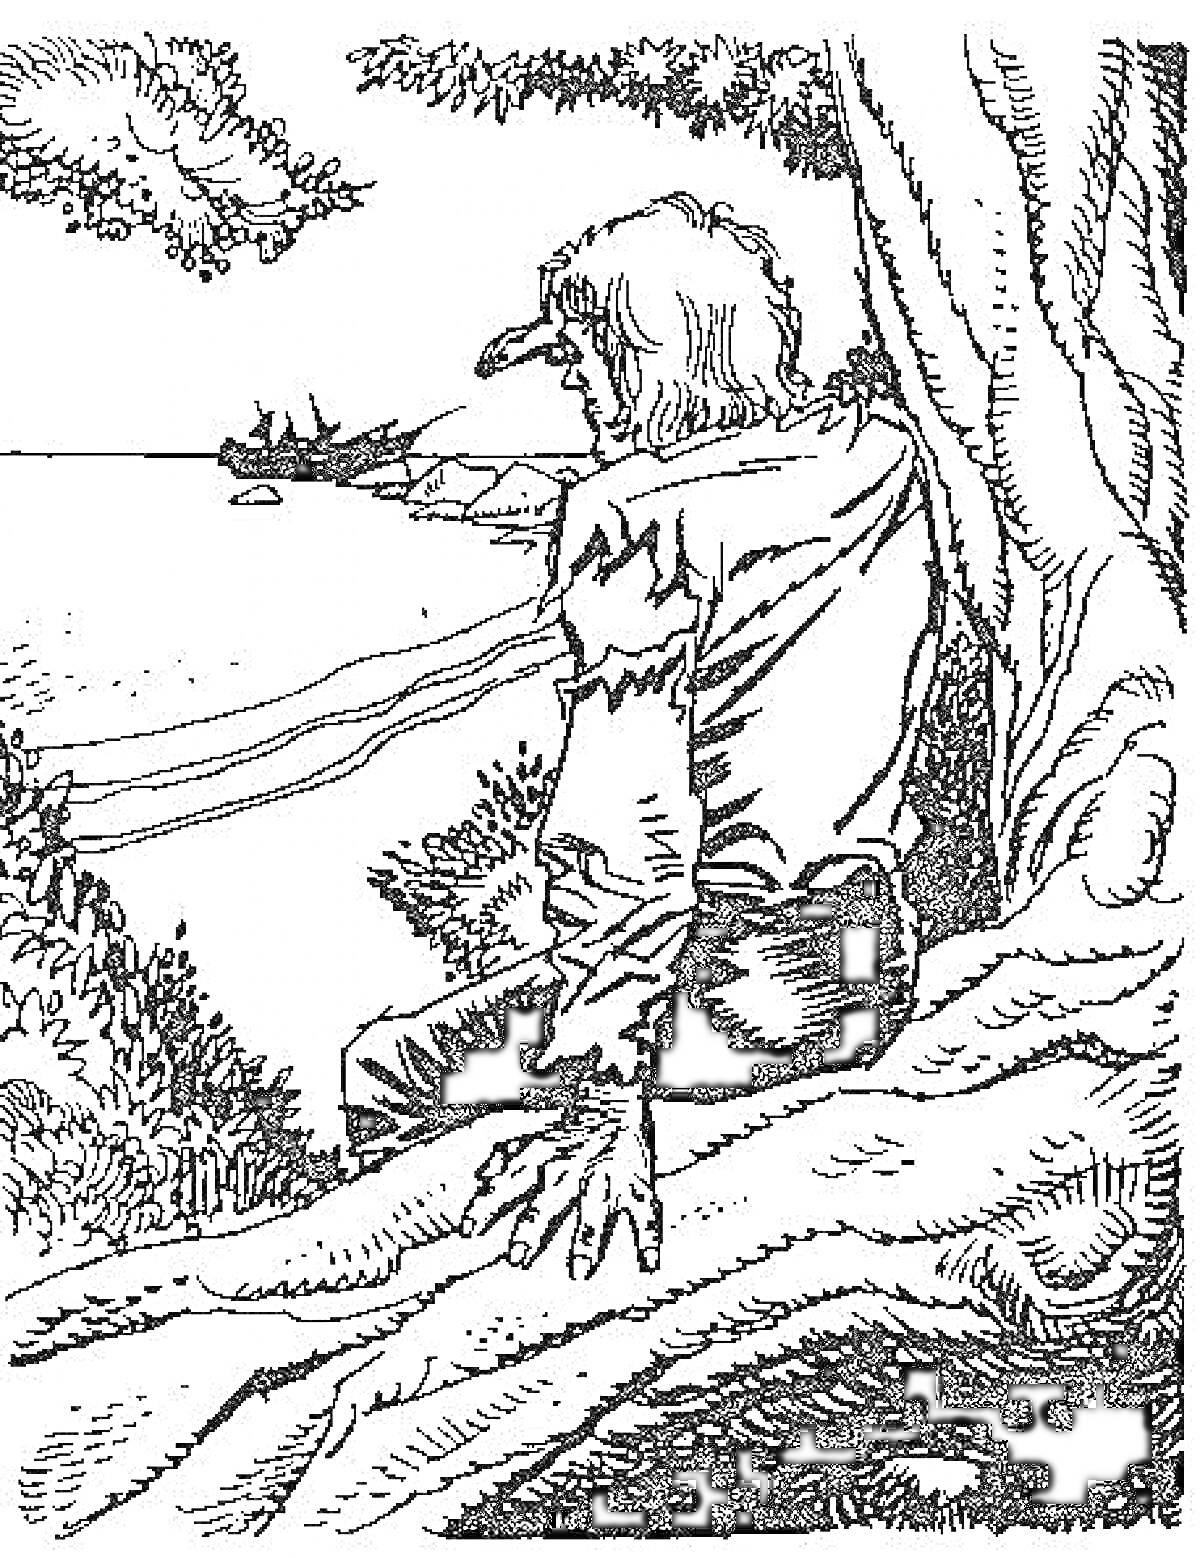 Робинзон Крузо, сидящий под деревом с видом на море и остров на горизонте